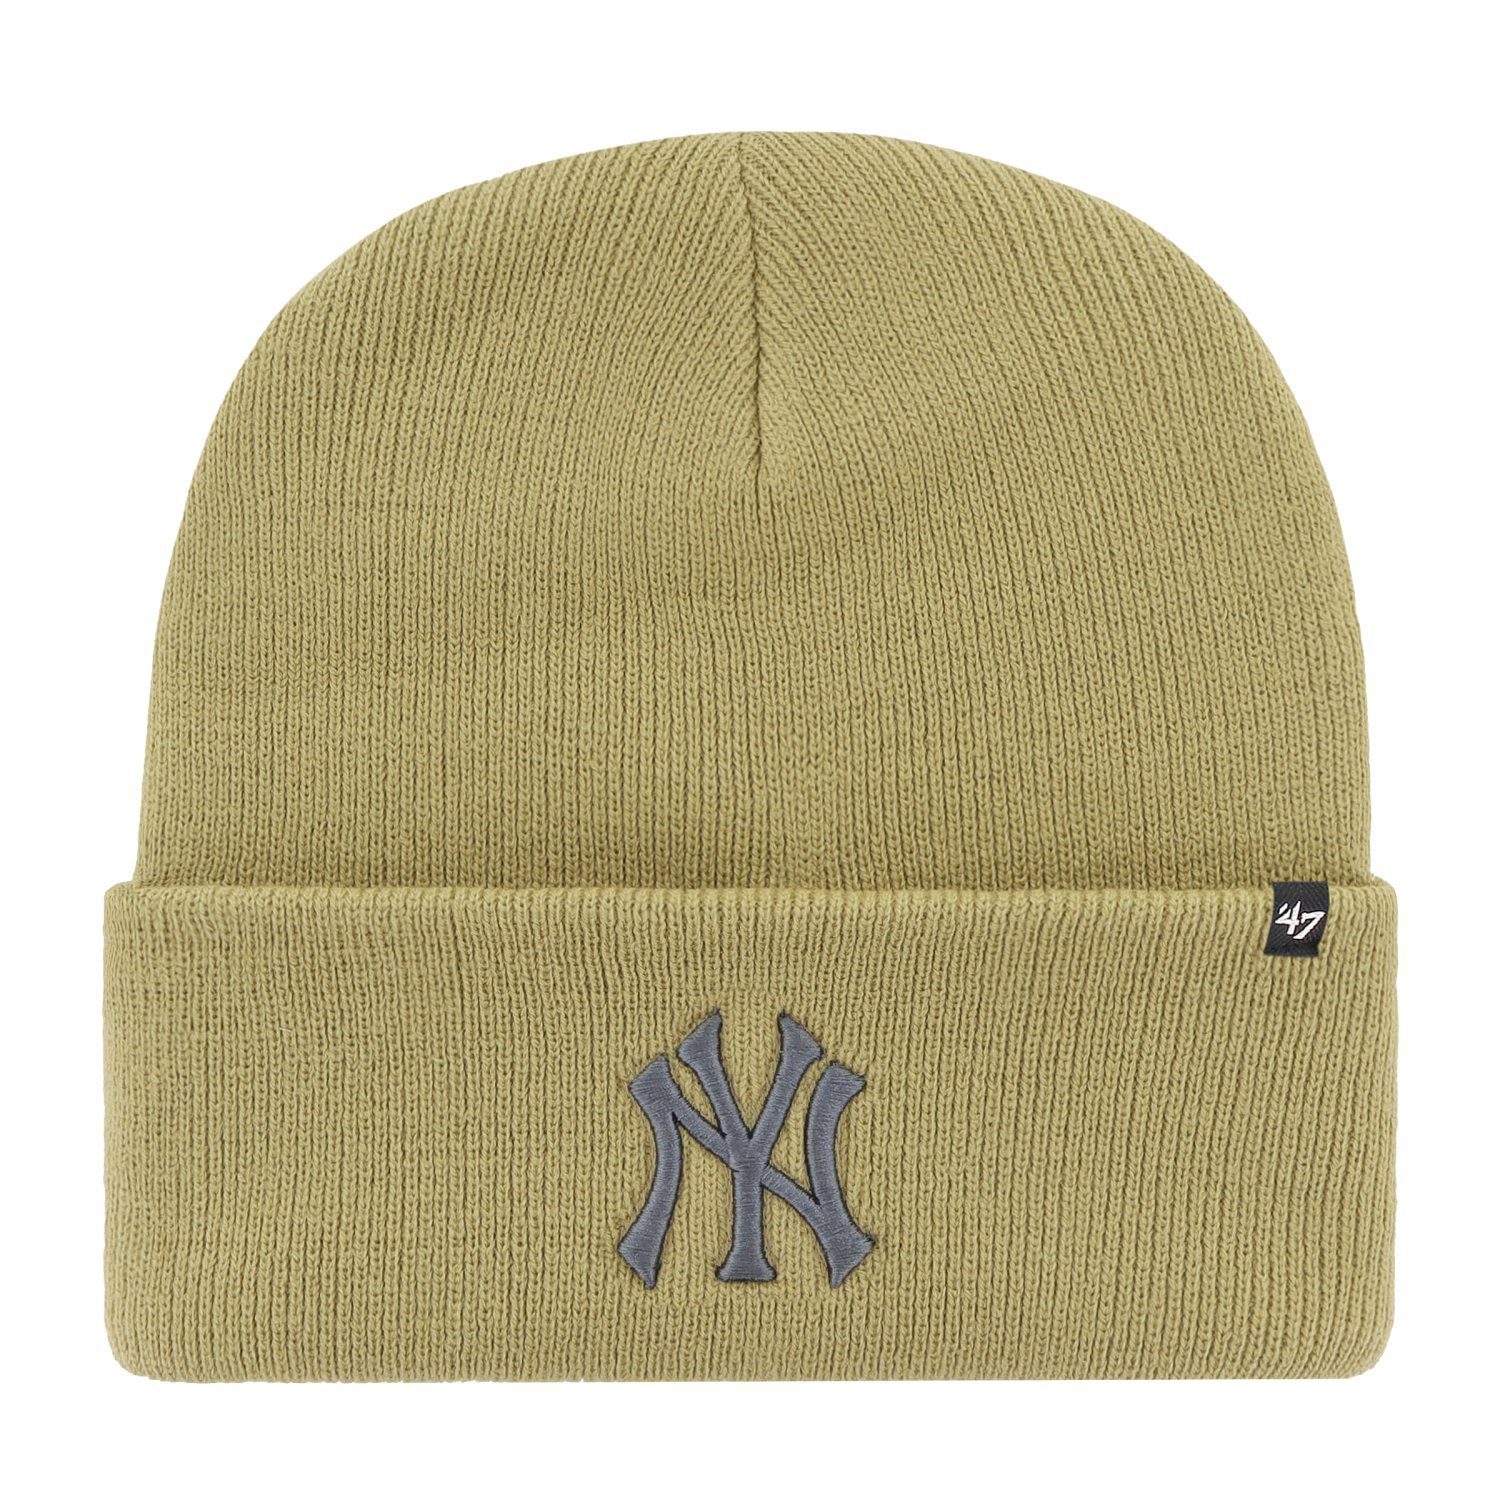 Yankees Fleecemütze gold HAYMAKER Beanie old '47 NY Brand